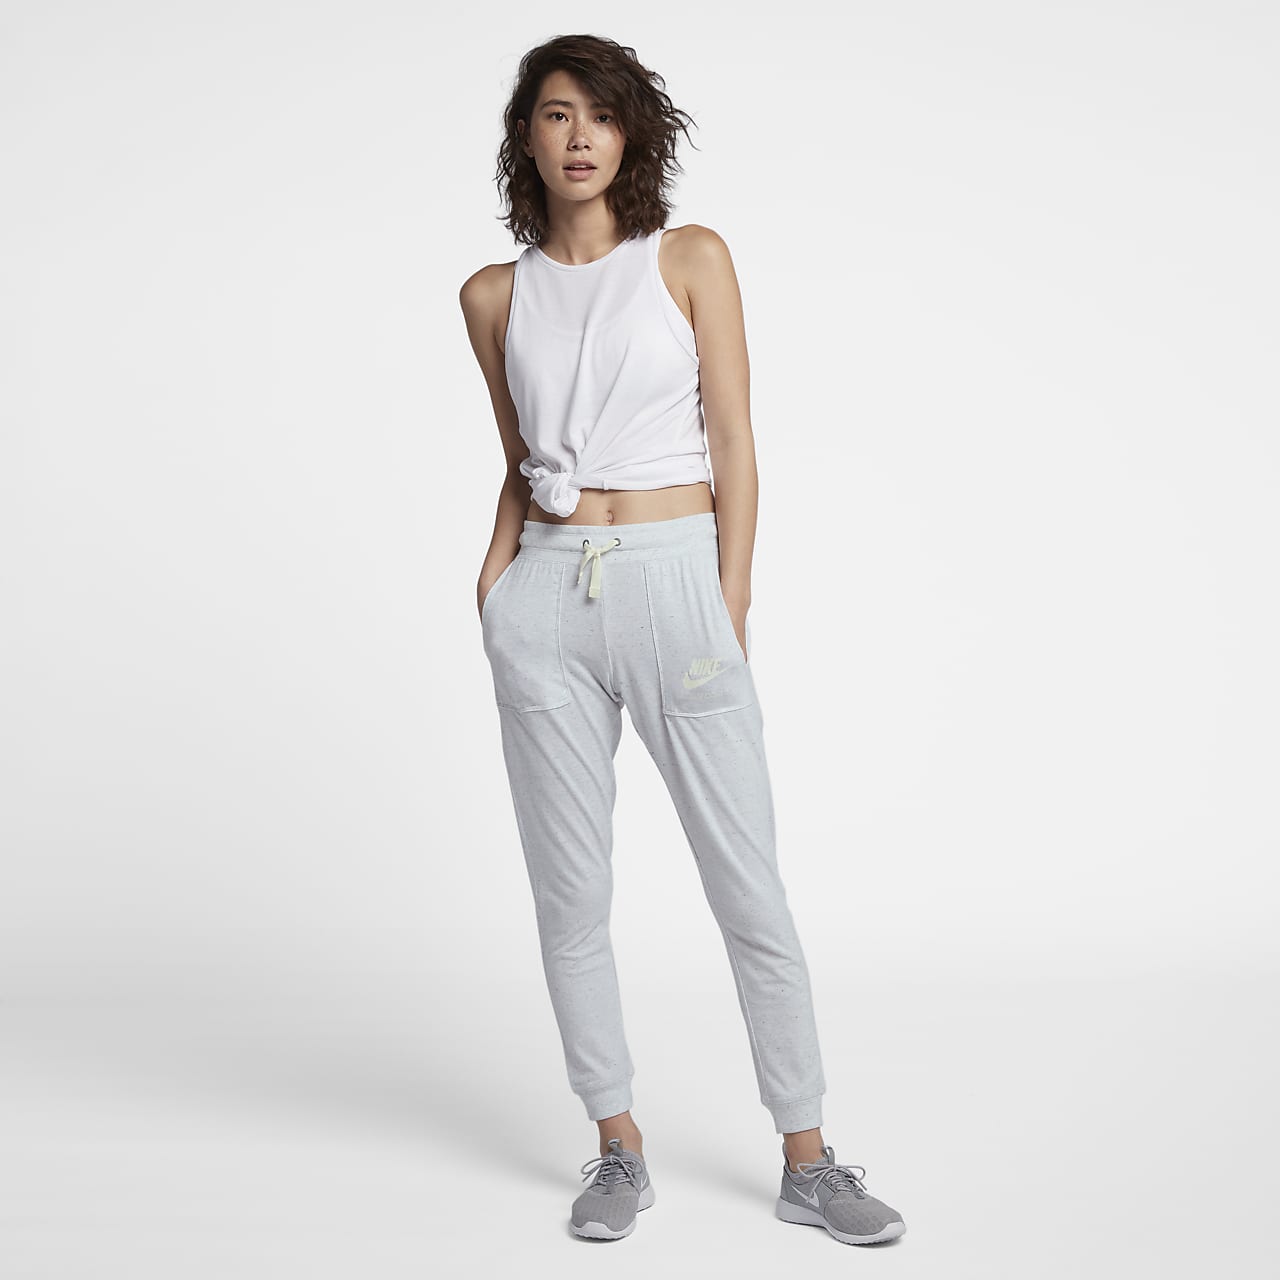 Nike Women's Sportswear Gym Vintage Pants : : Clothing